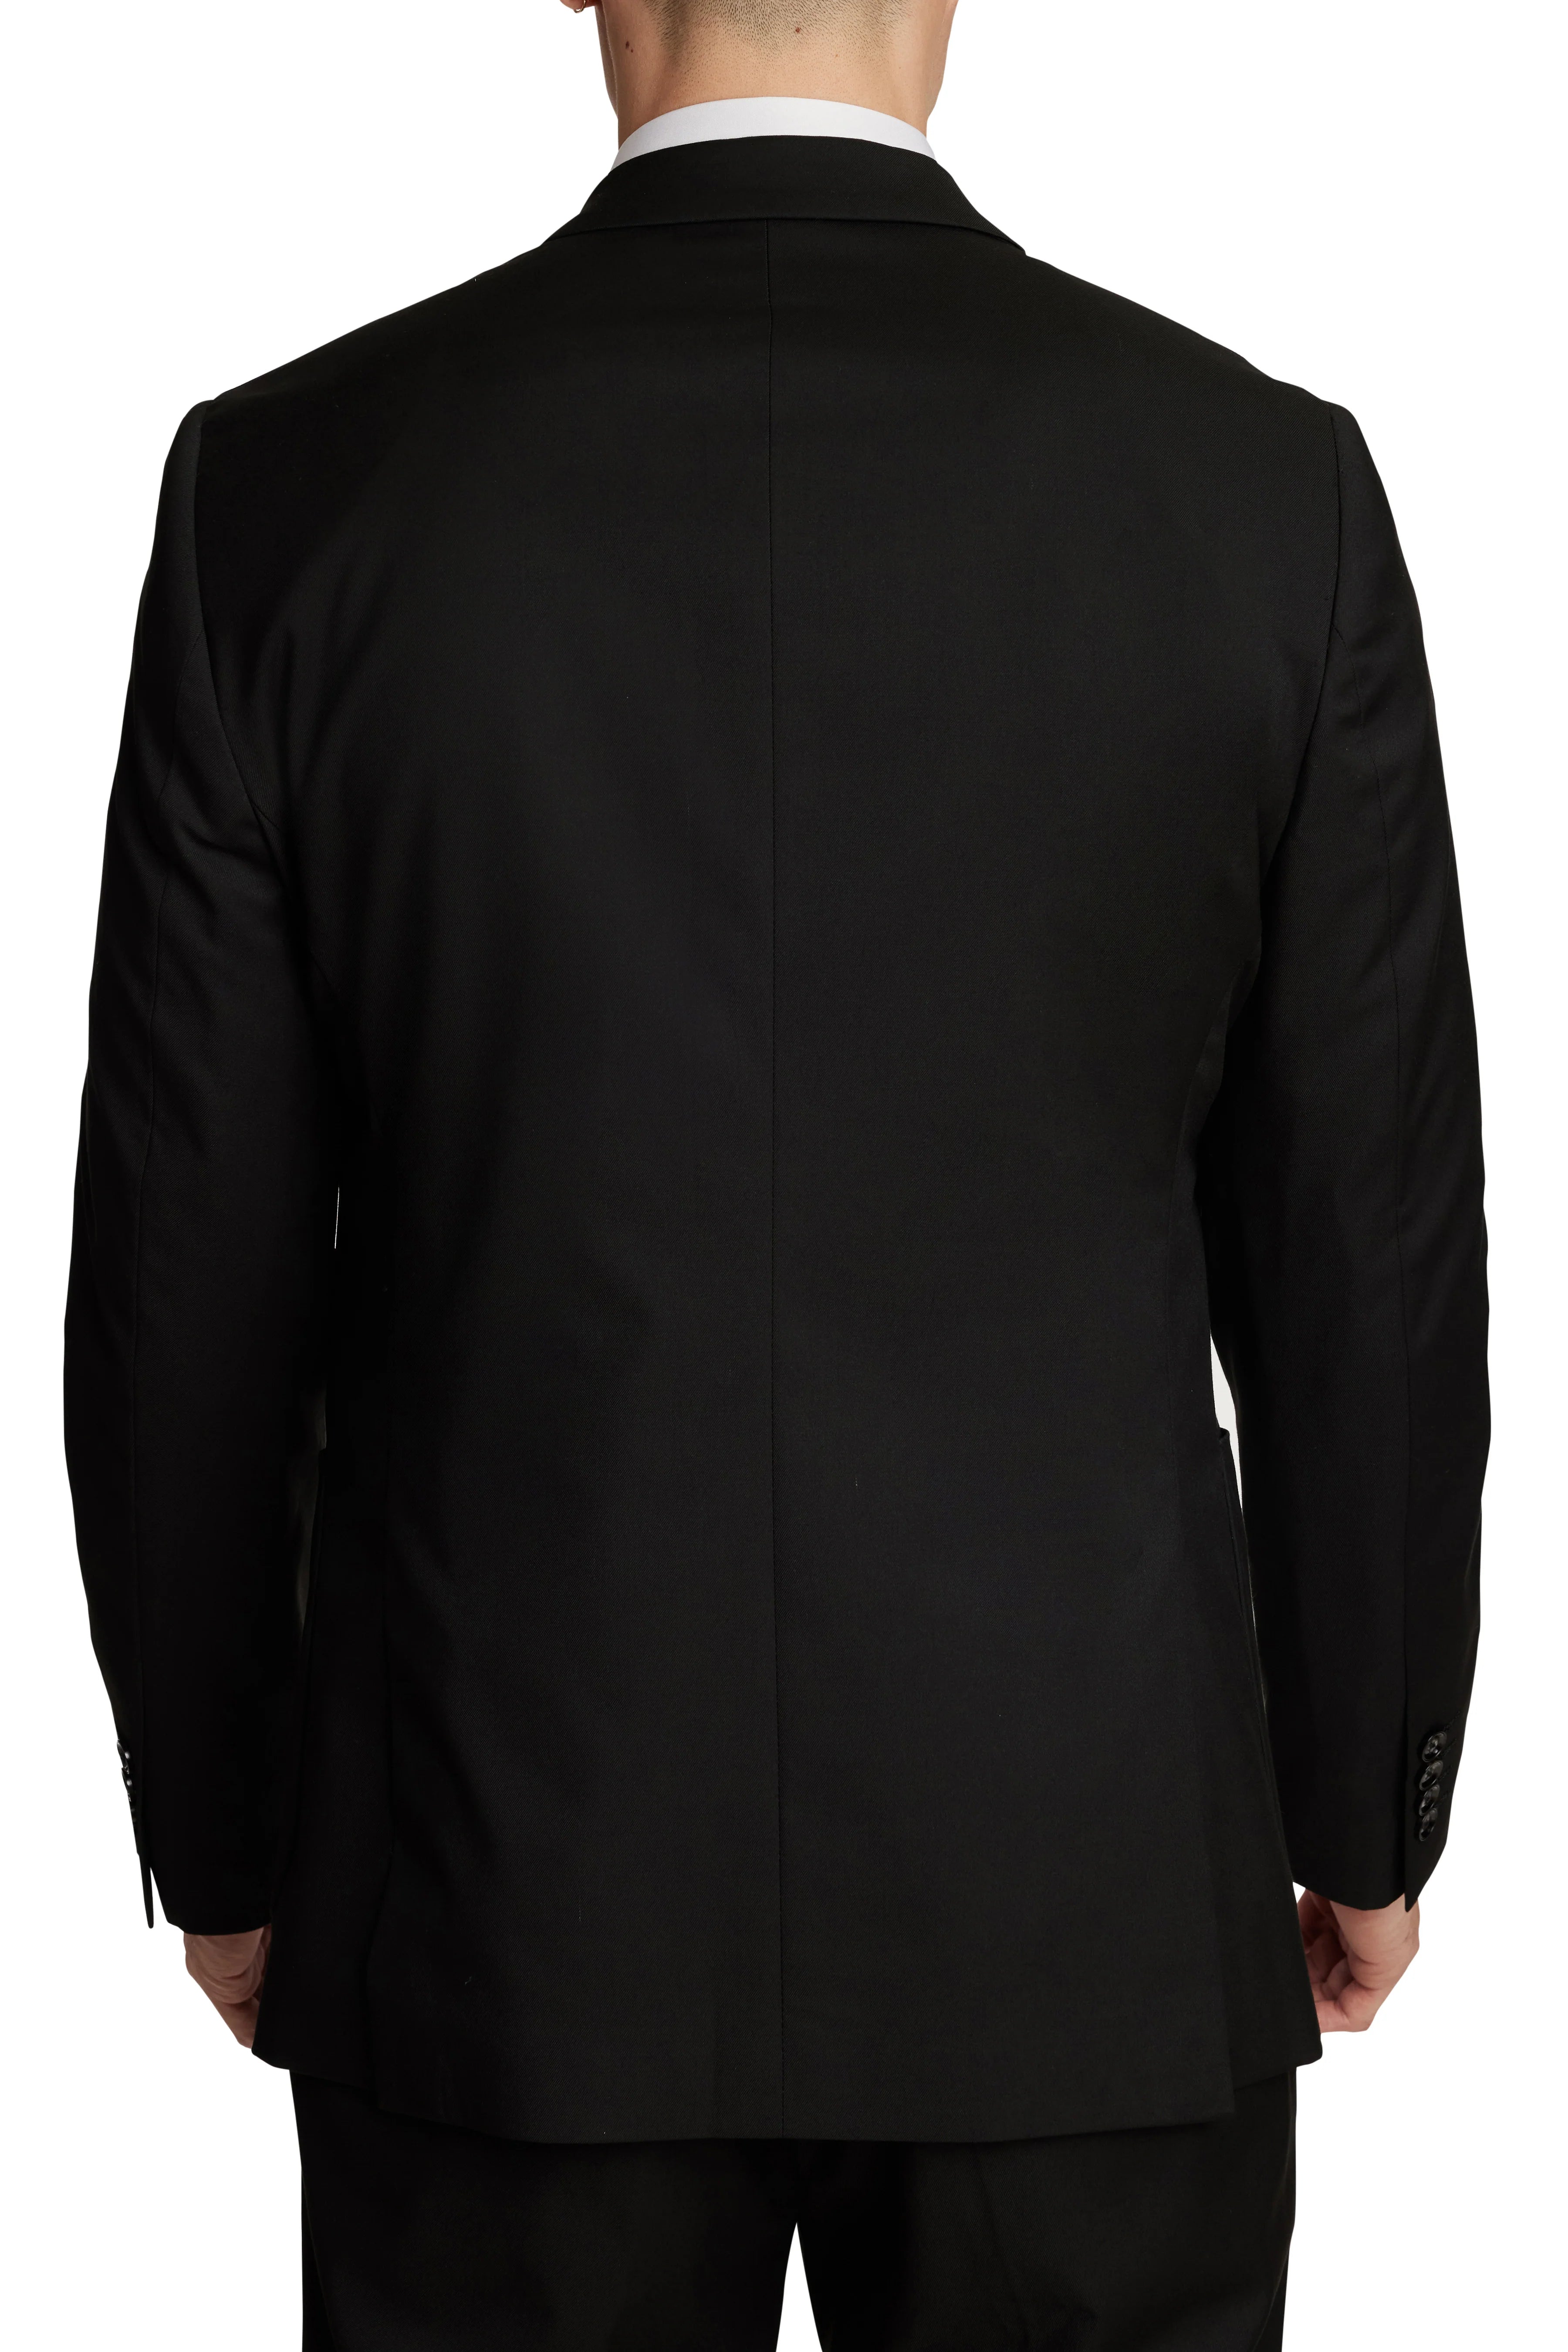 Paisley & Gray Dover Notch Simply Black Slim Jacket